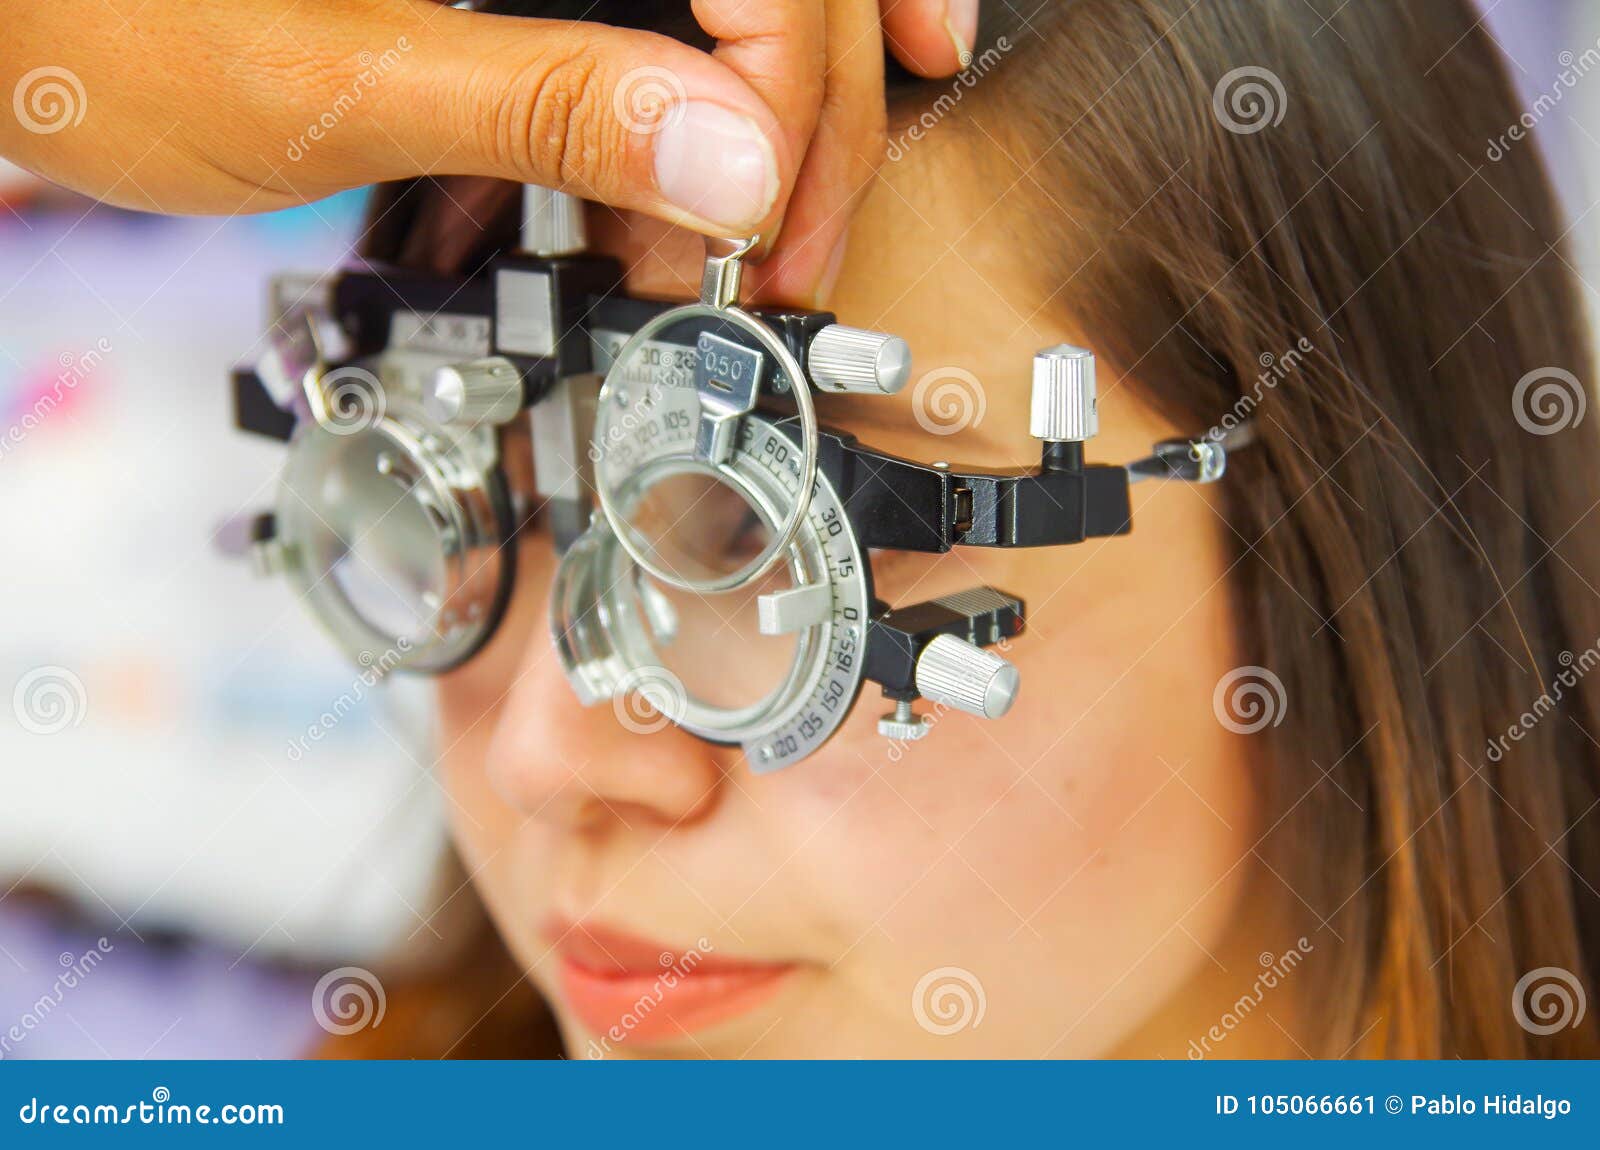 Manual de roshtlum oftalmologie download gratuit